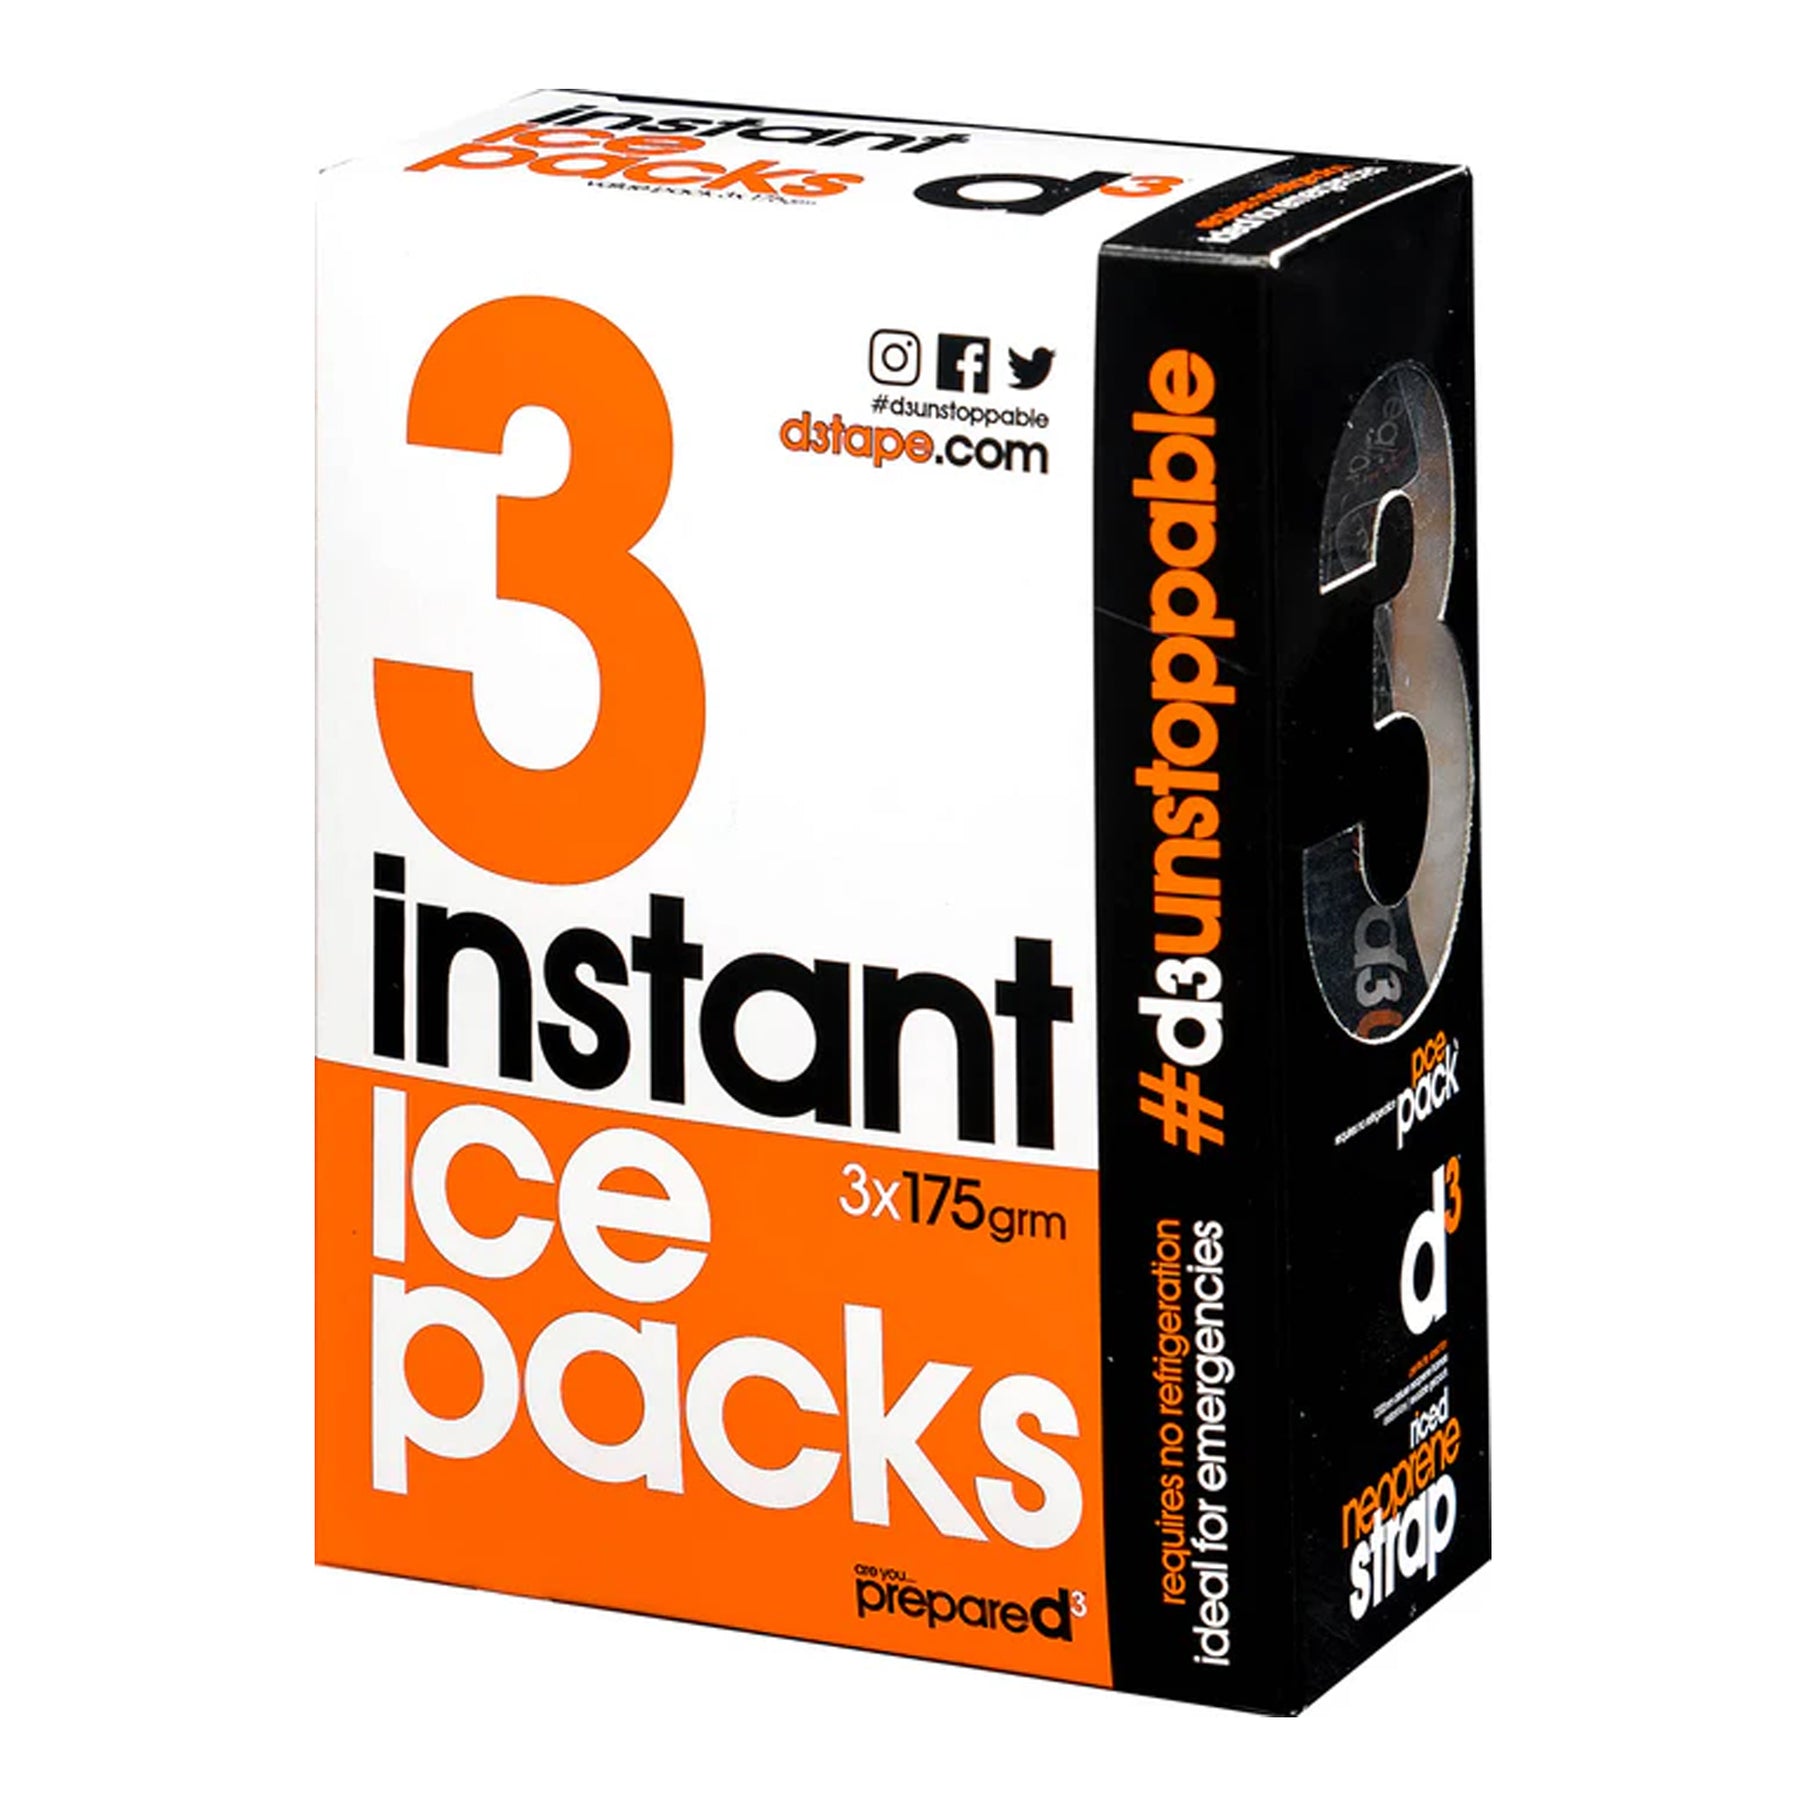 D3 Instant Icepack Pack of 3